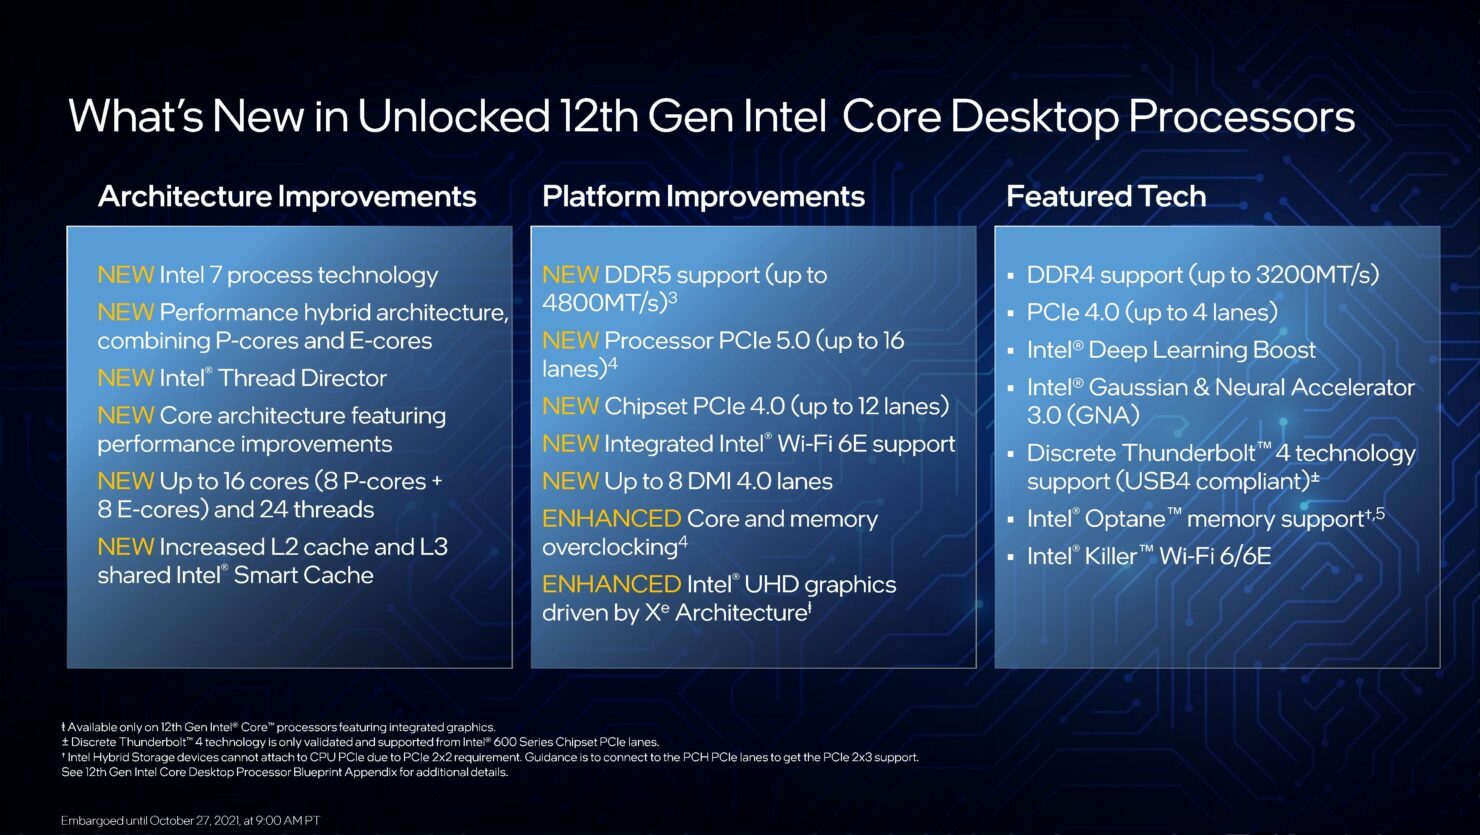 12th-gen-intel-core-desktop-processors-blueprint-presentation-embargoed-until-oct-27-2021-at-9-00am-pt-page-015